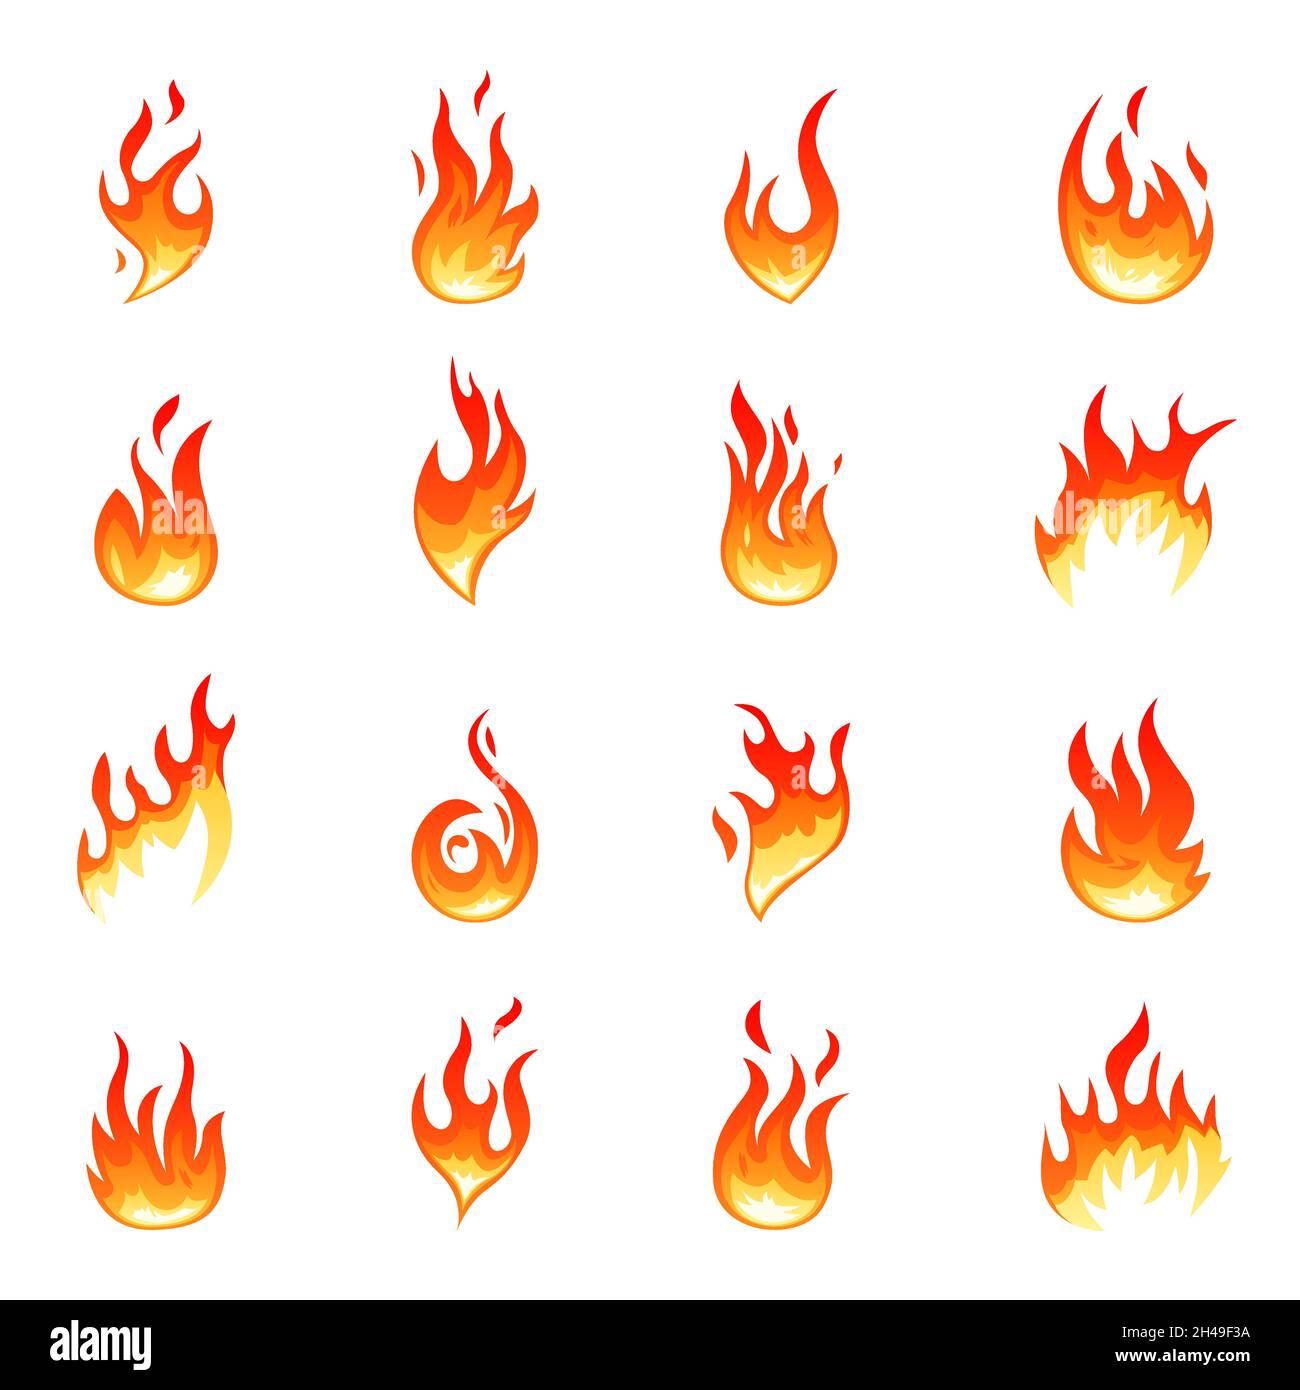 Cartoon Flame Kollektion. Heiße Feuerflammen, isolierte glühende rote Hitze. Heizung grafische Elemente, Fackel-Effekt. Bonfire formt aktuelle Vektorsymbole Stock Vektor